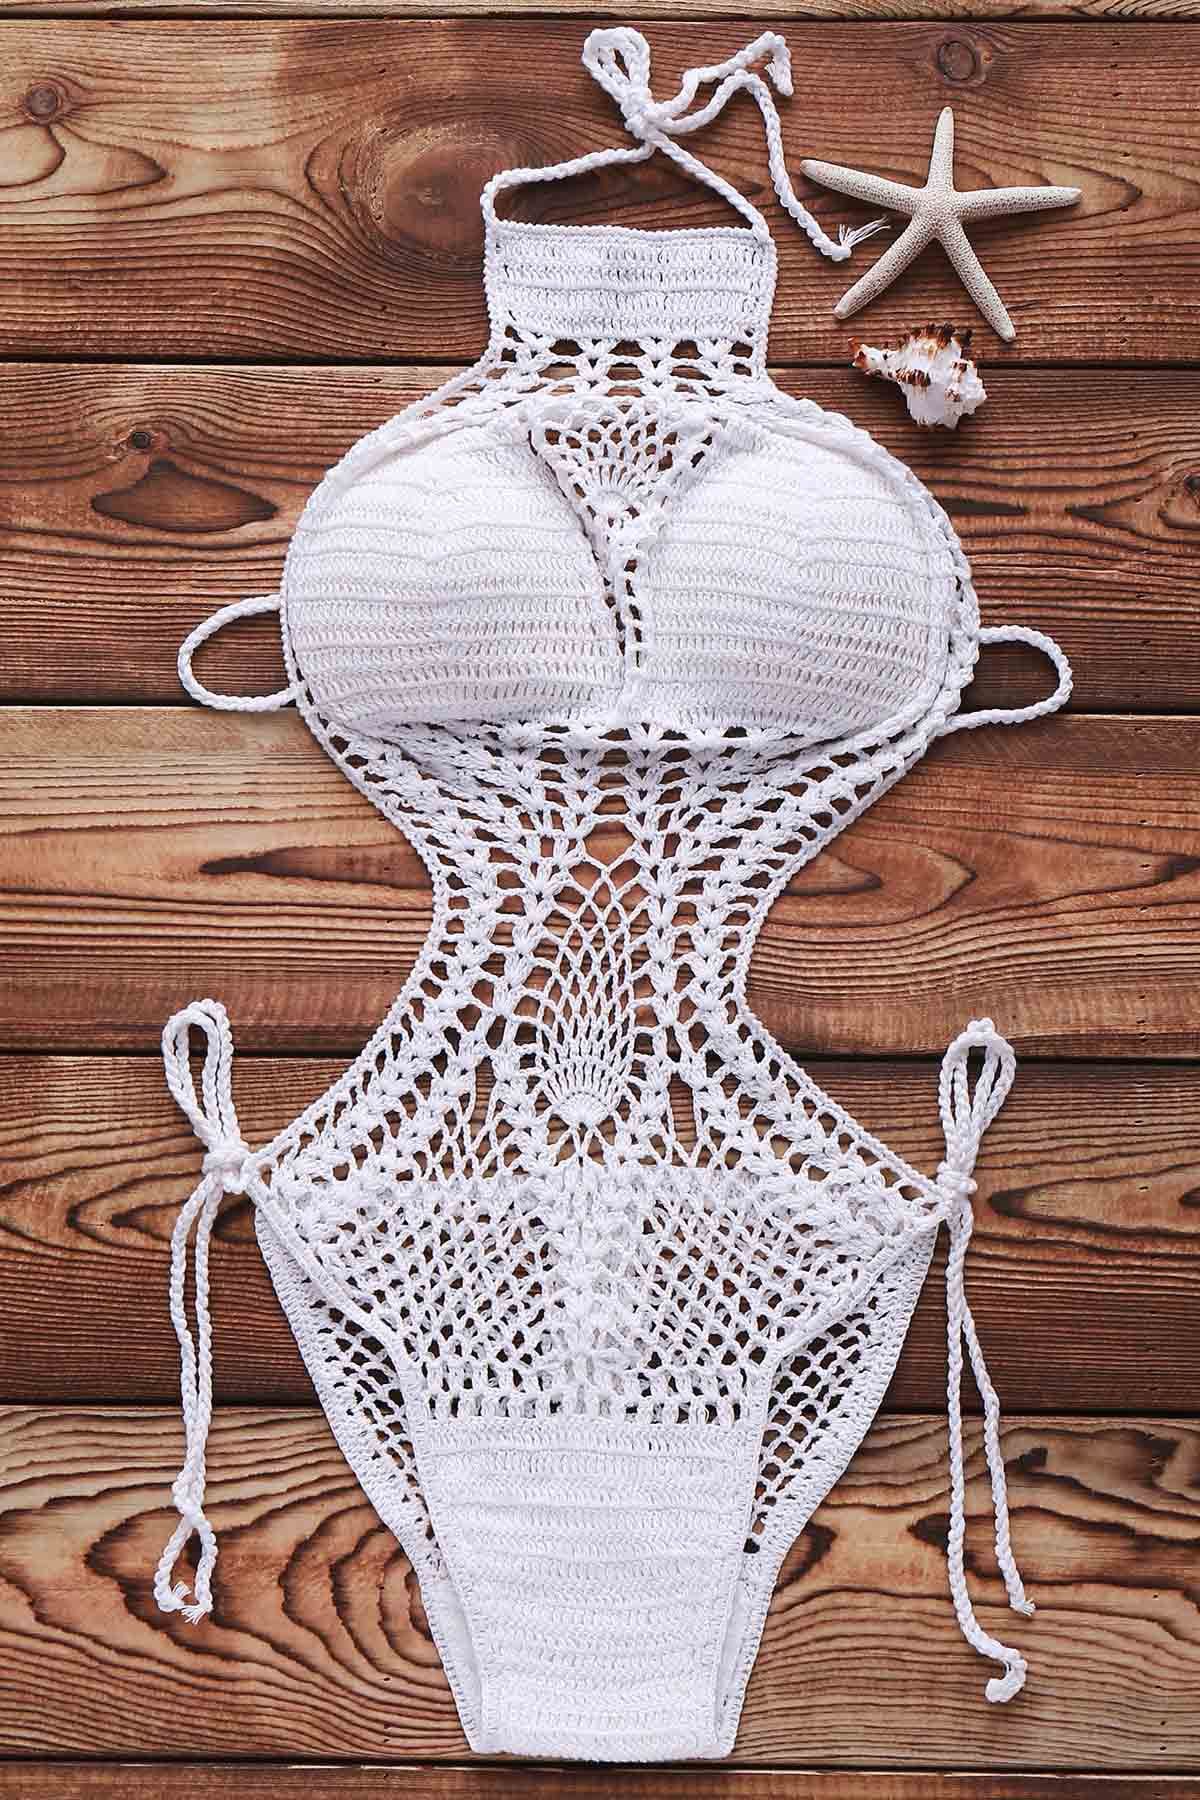 2018 Sexy Halter High Neck Crochet Monokini One Piece Swimsuit In White S